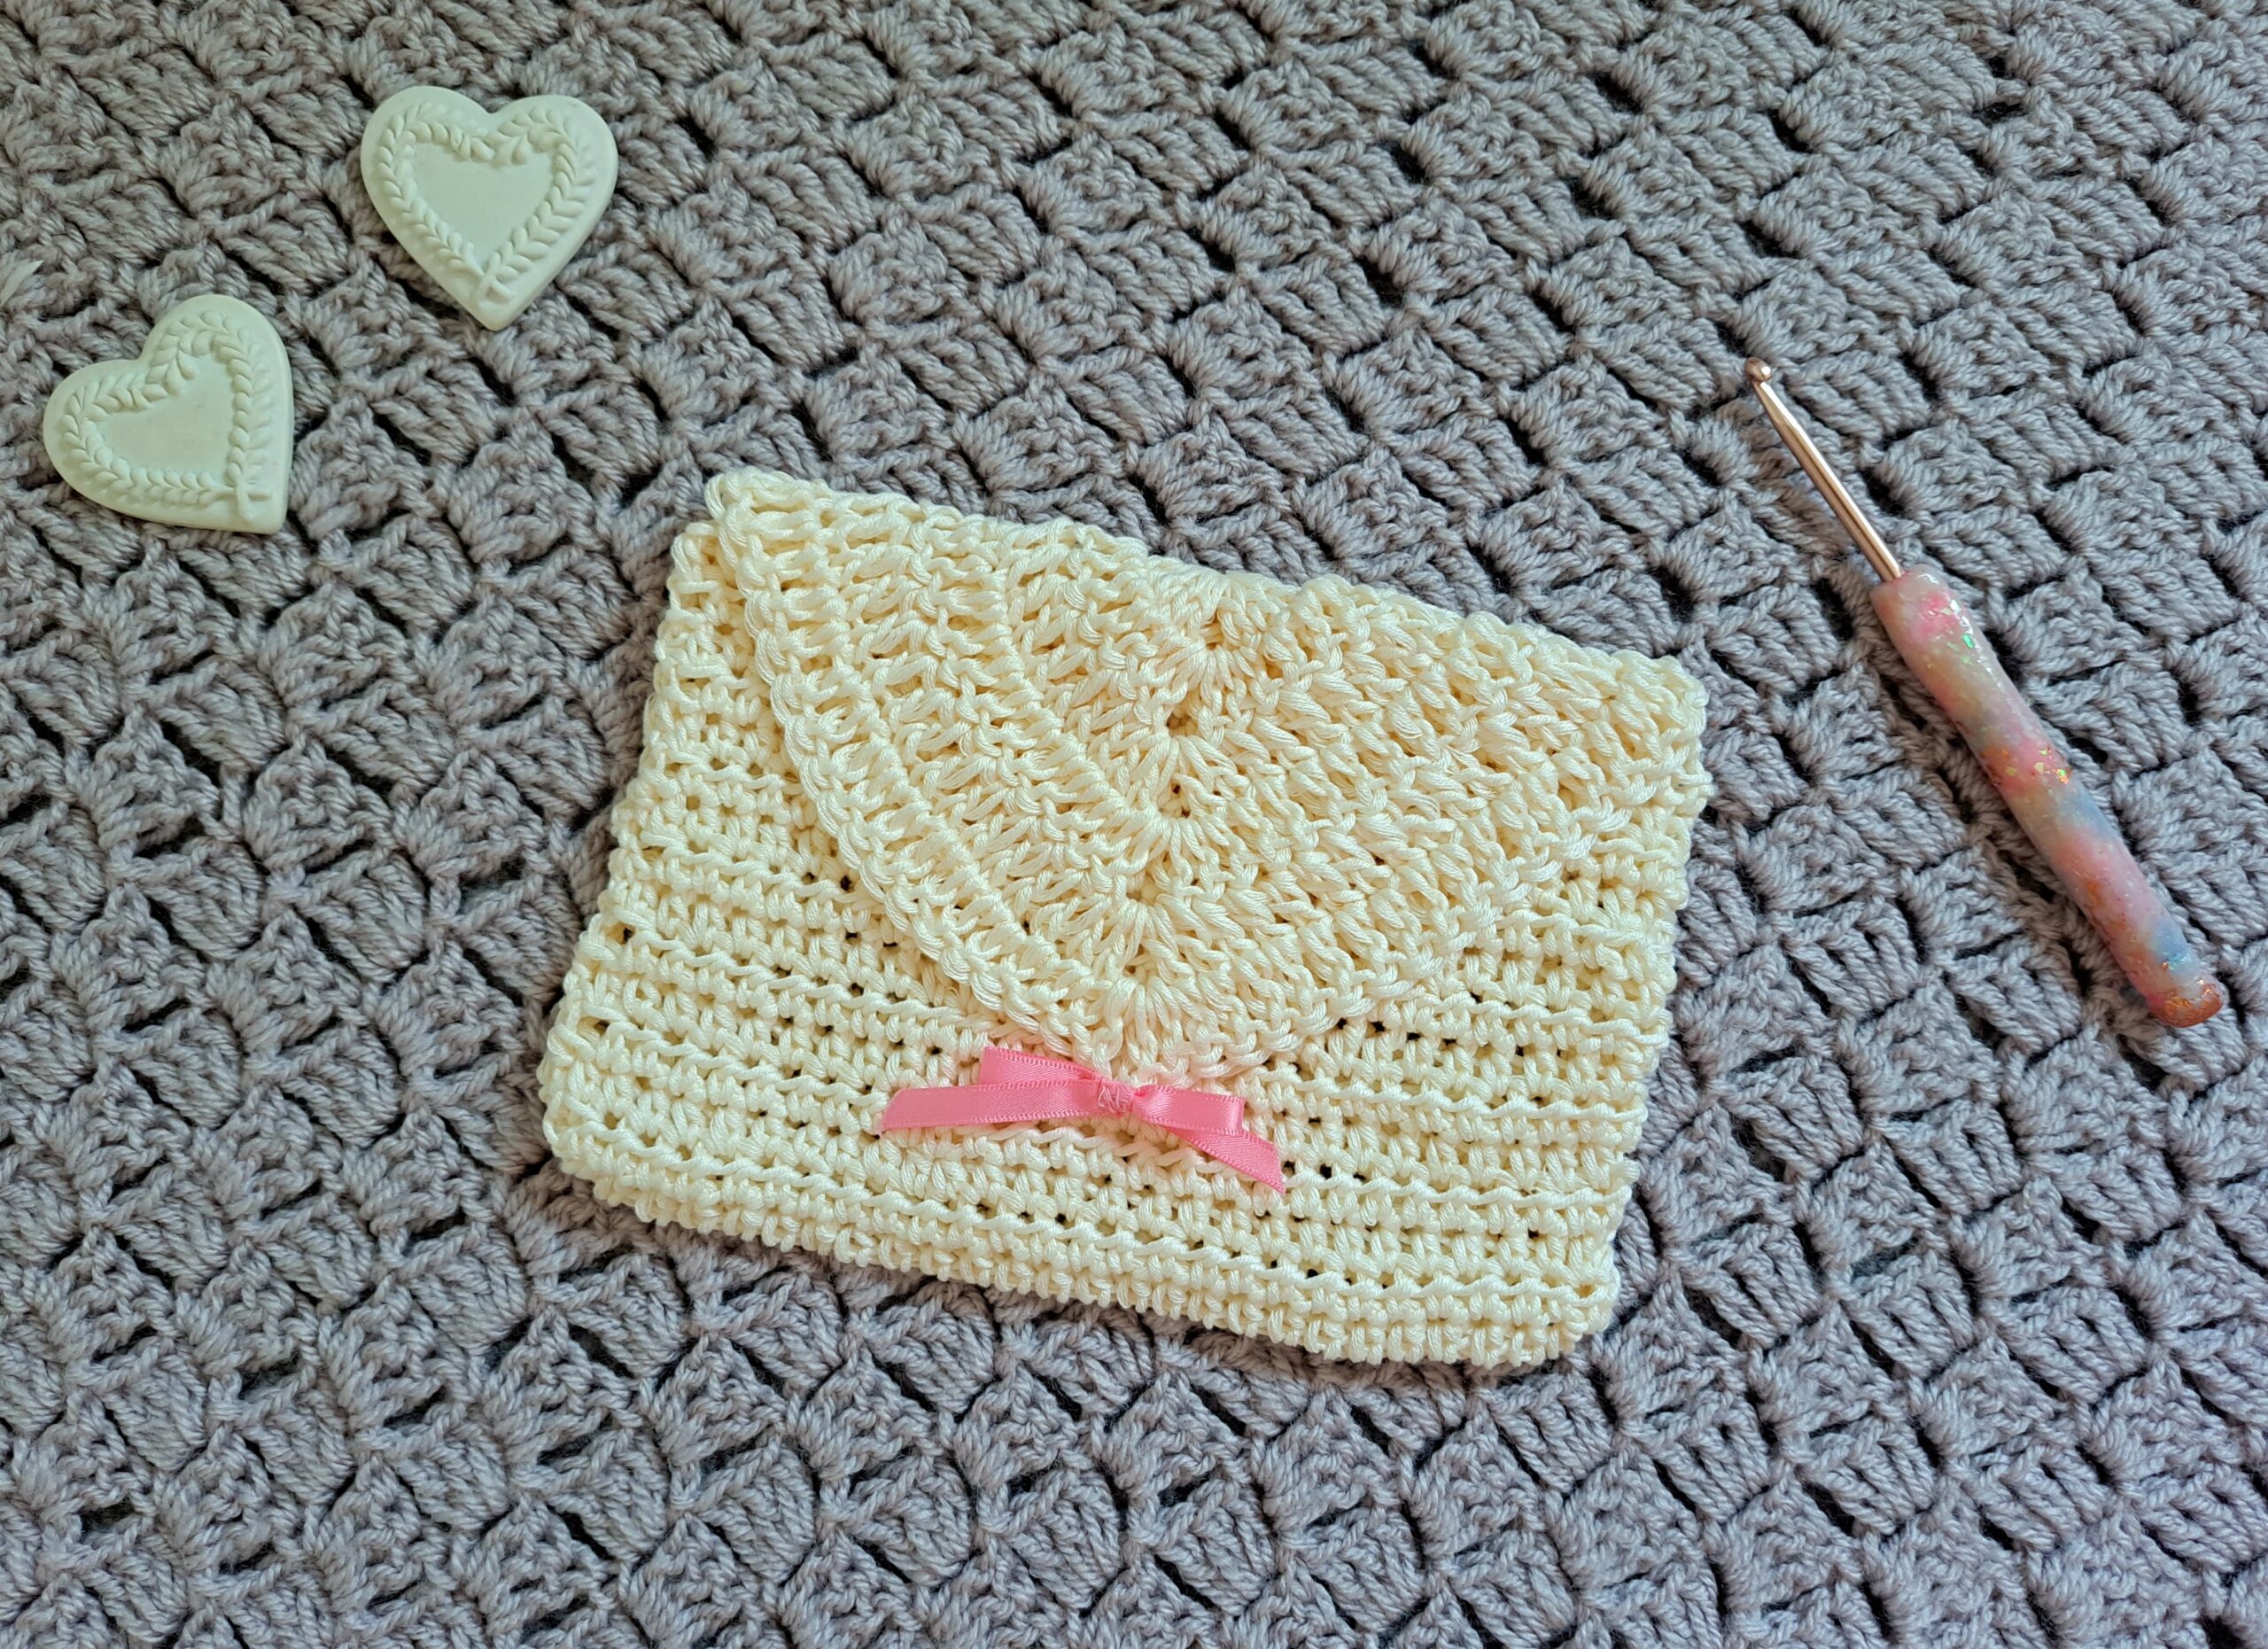 12+ Fashionable and Elegant Crochet Bag Pattern Ideas and Images - Megan  Anderson Knittingway.com | Crochet bag pattern, Crochet bag pattern free,  Free crochet bag